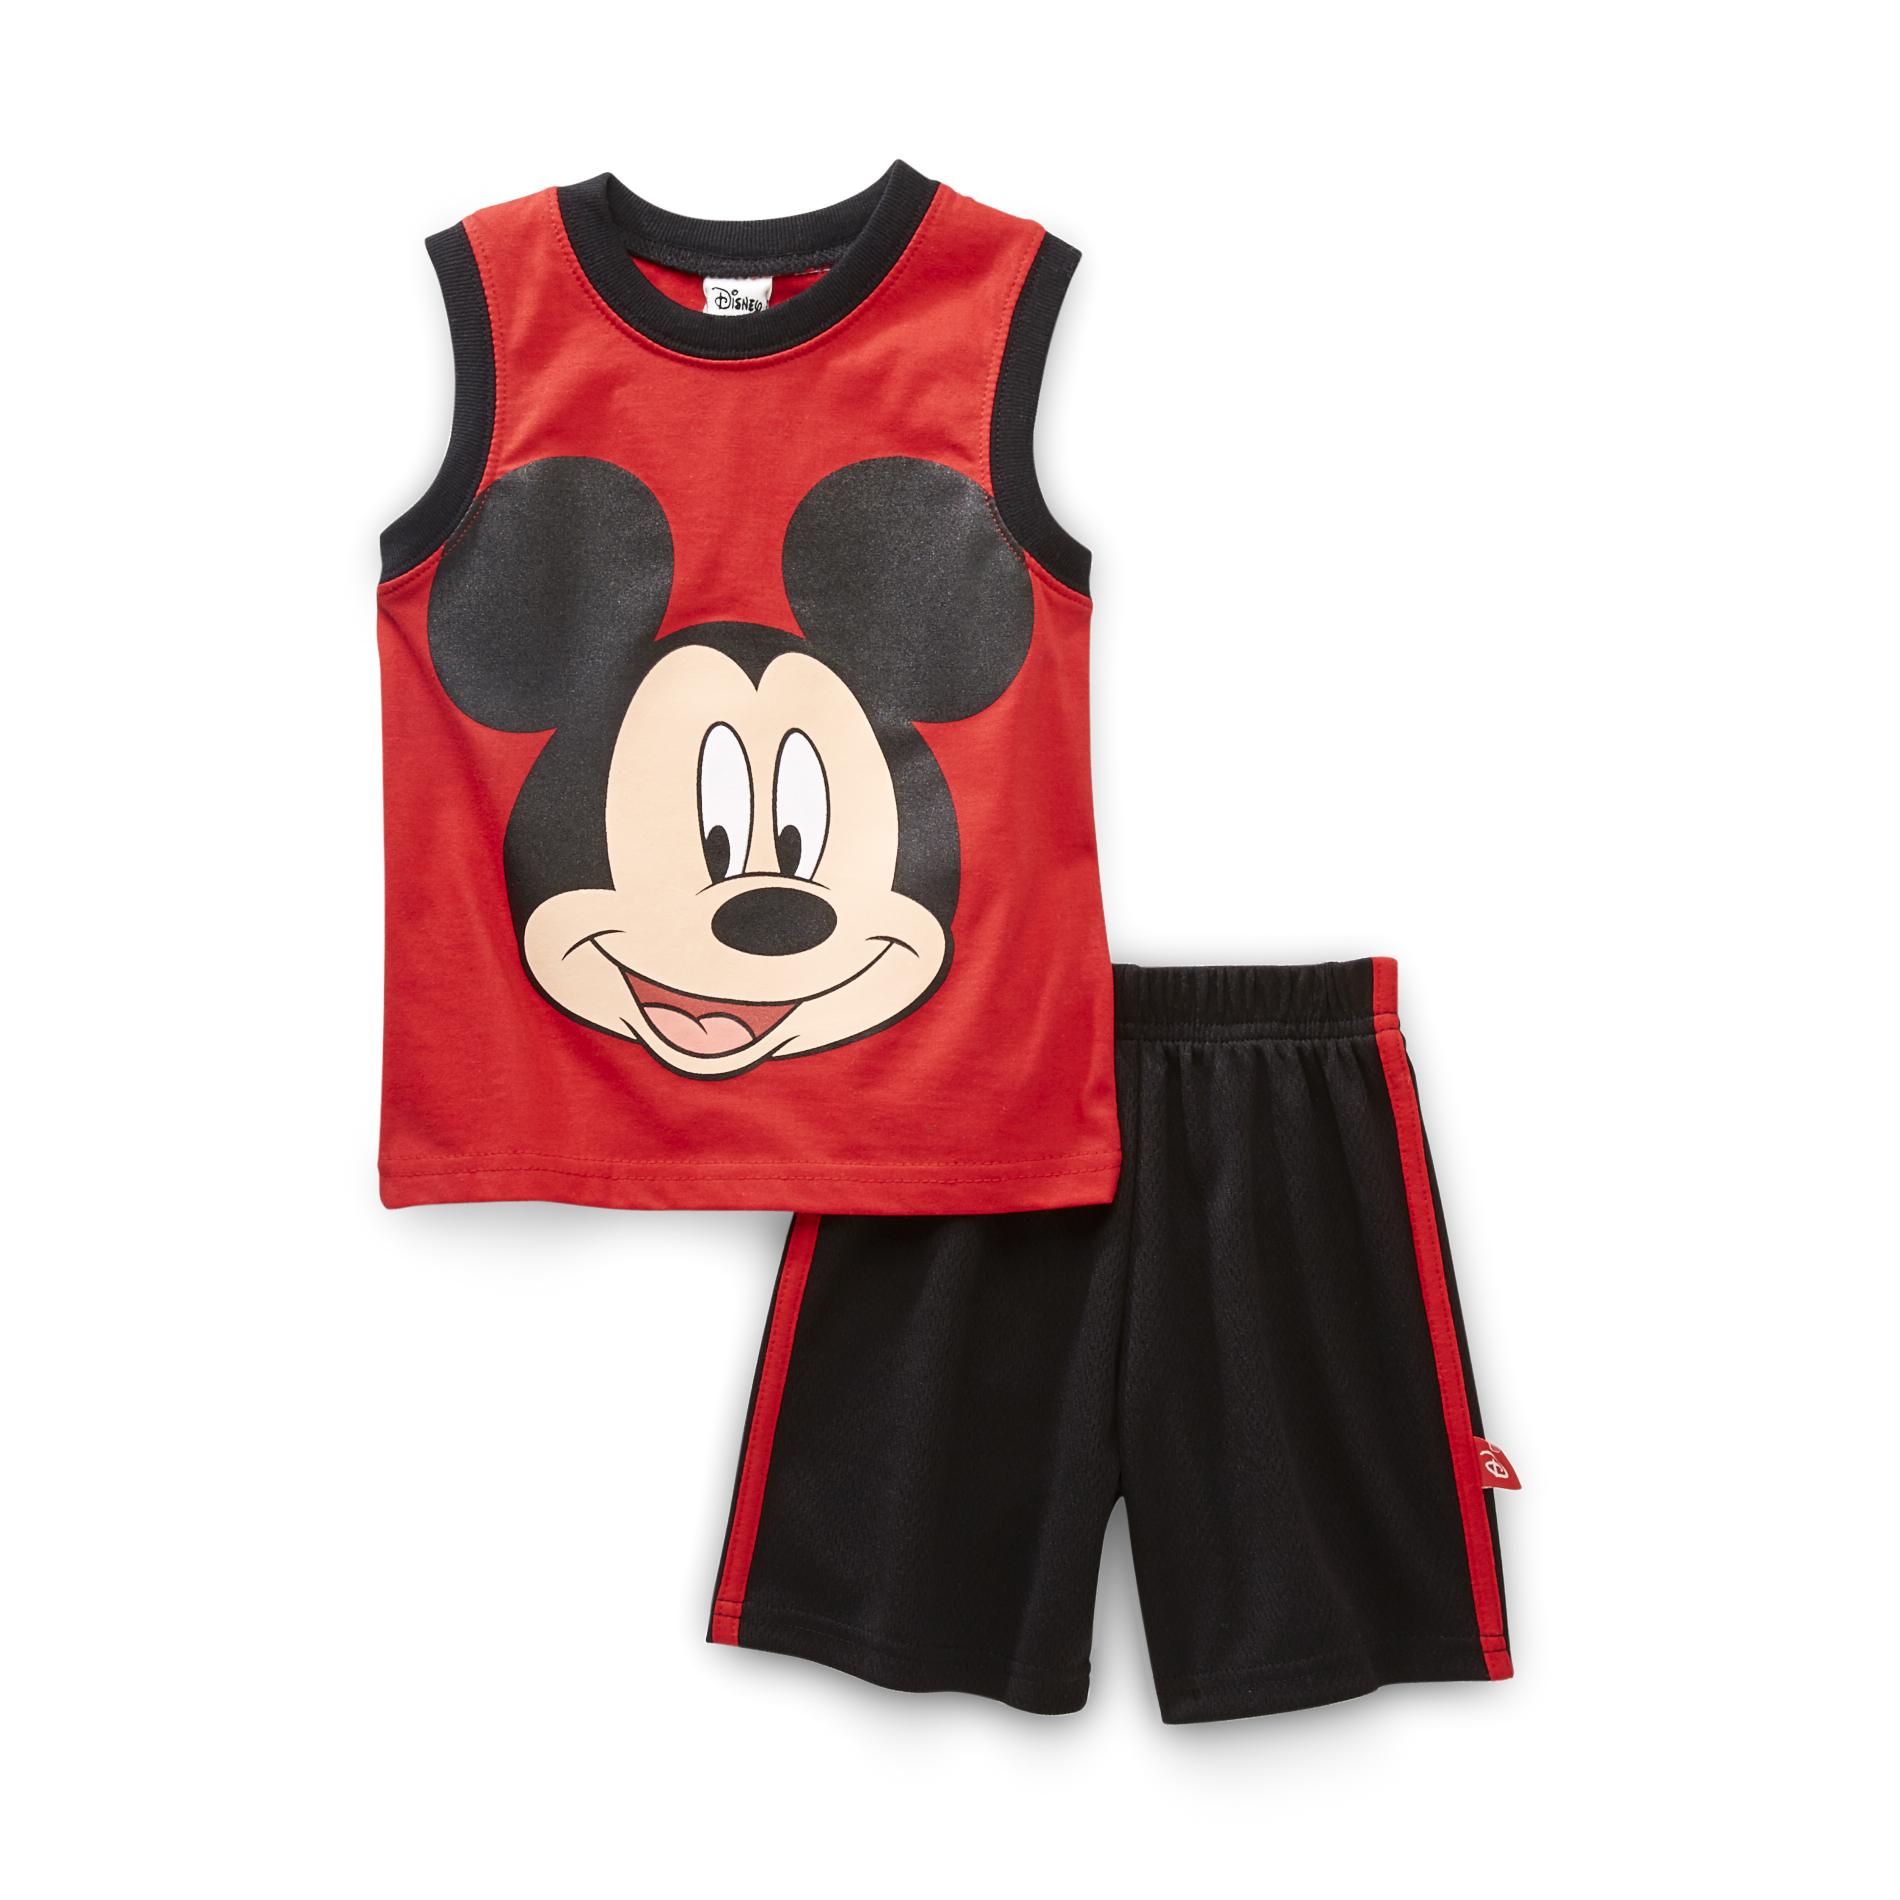 Disney Infant & Toddler Boy's Sleeveless Shirt & Shorts - Mickey Mouse